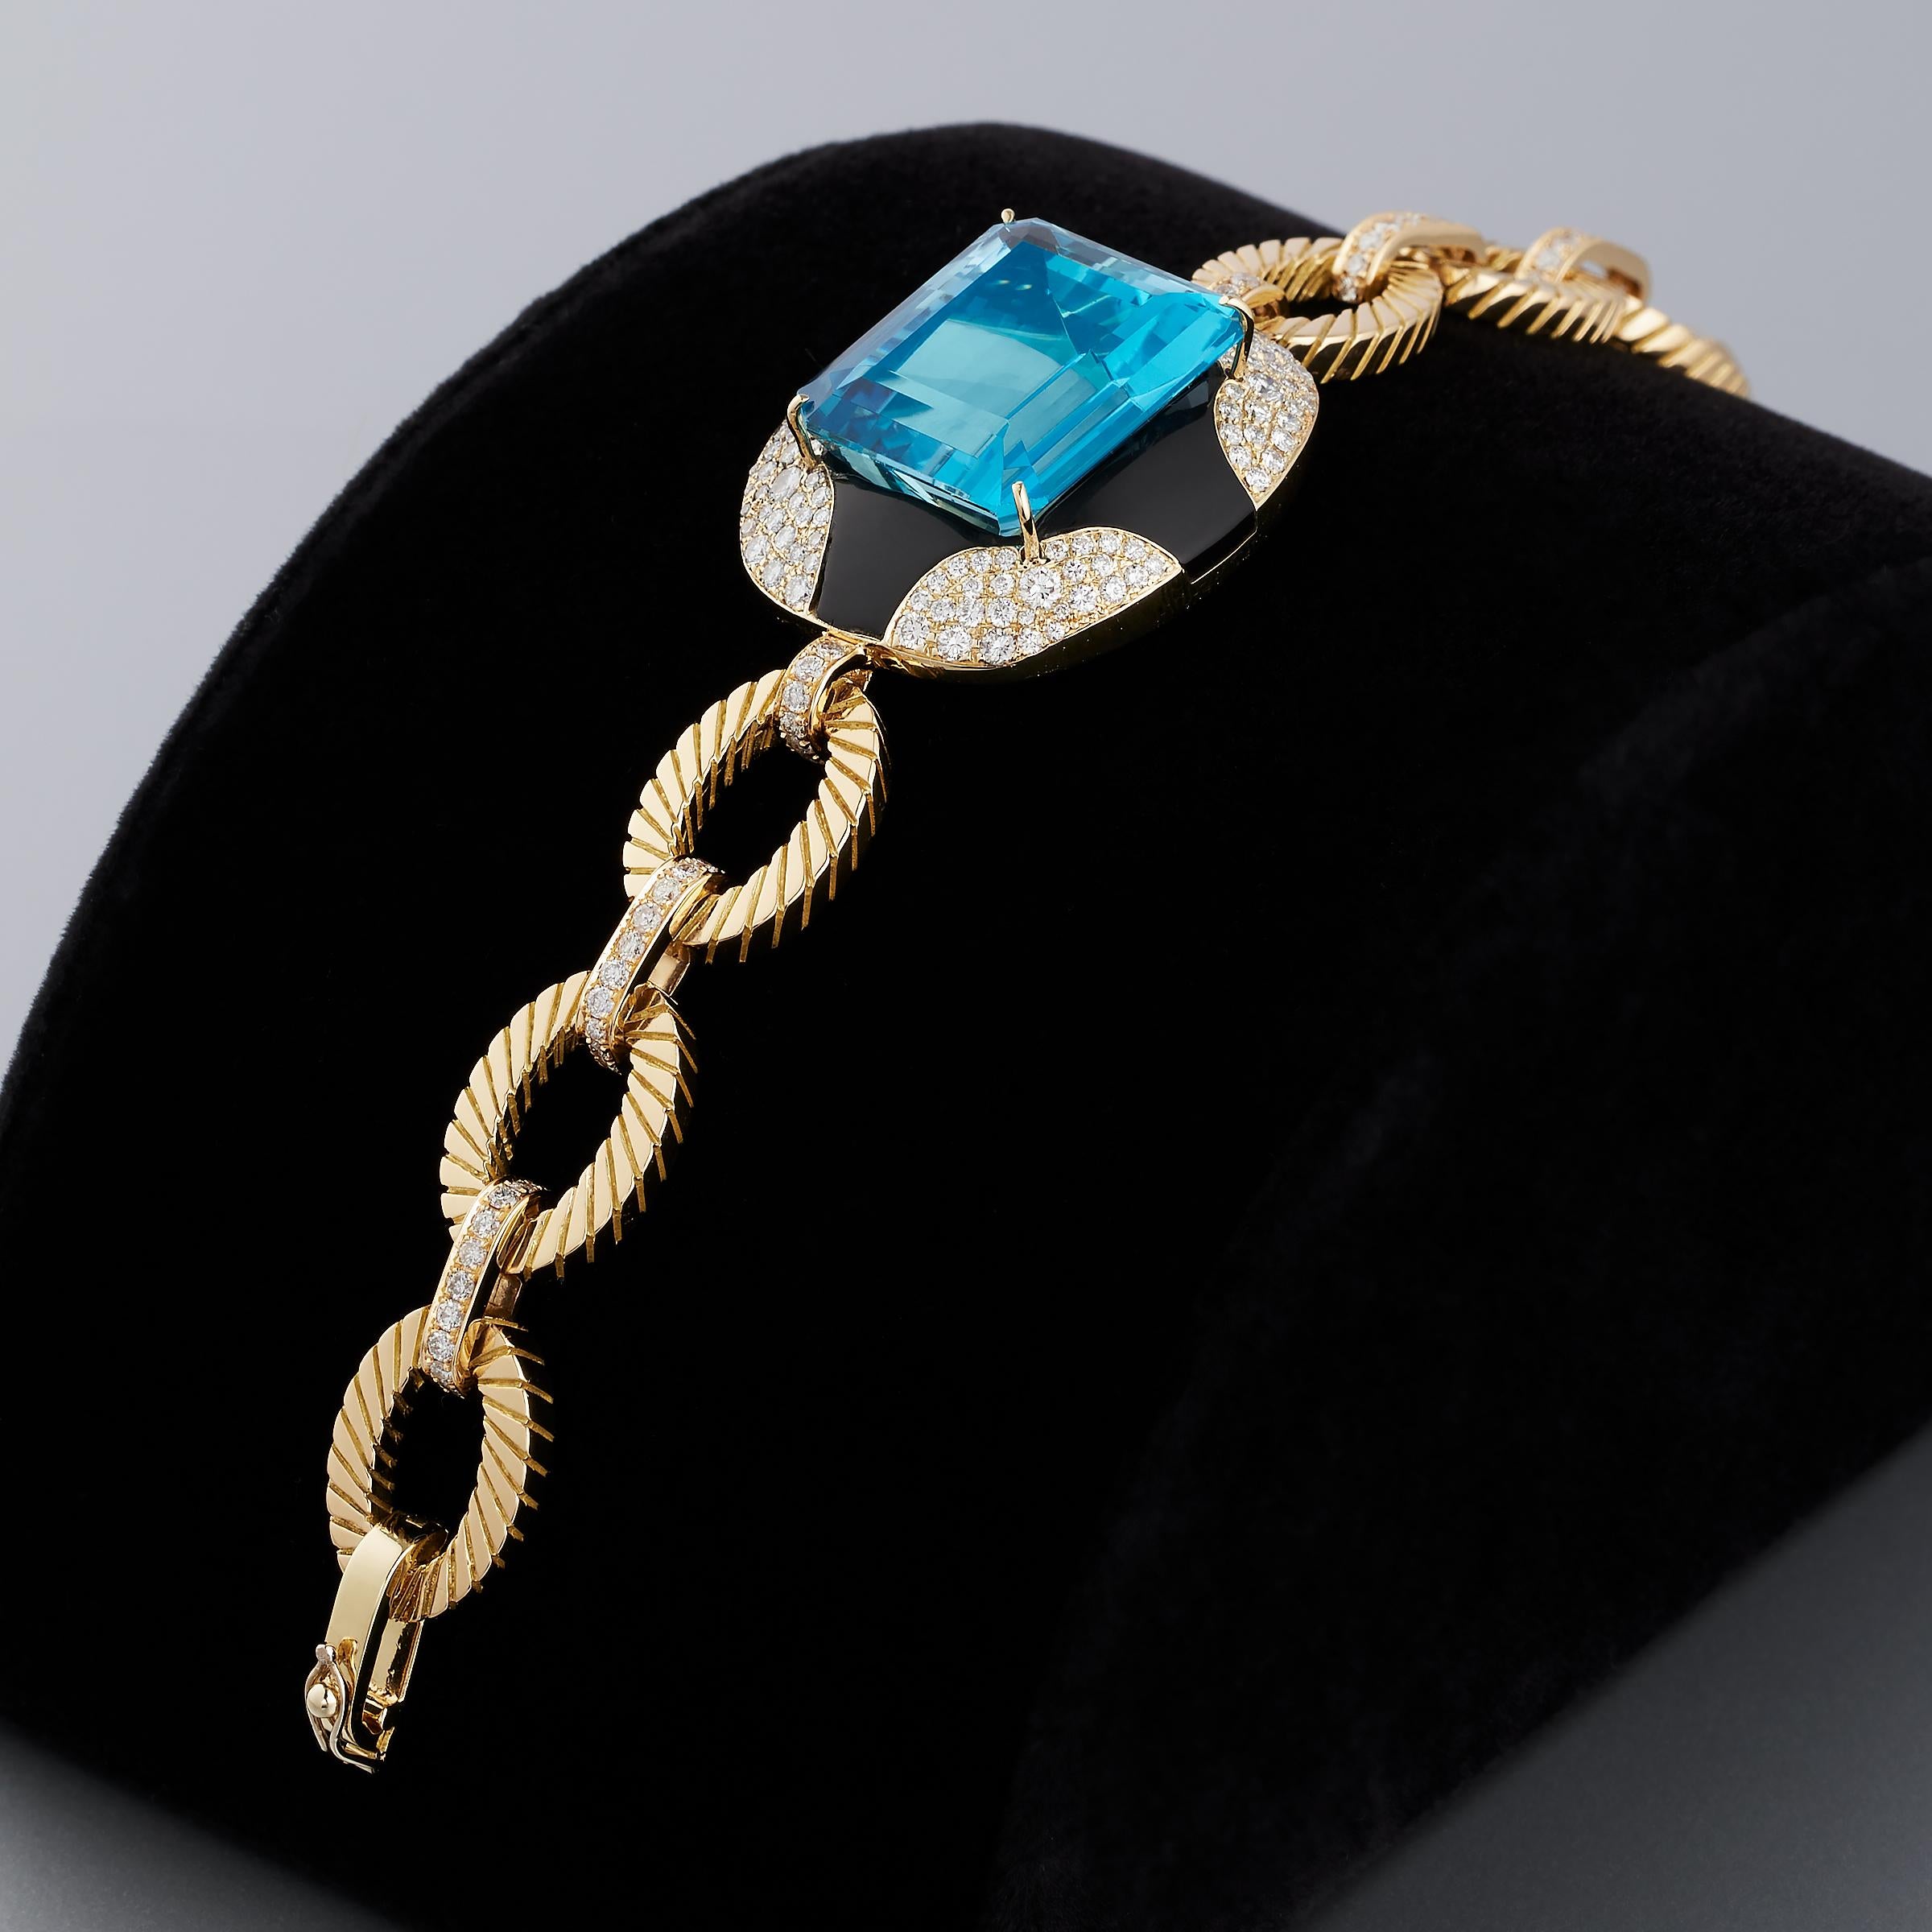 Vintage Aquamarine Diamond Onyx Mauboussin Earrings Necklace Bracelet Suite In Excellent Condition For Sale In Dallas, TX